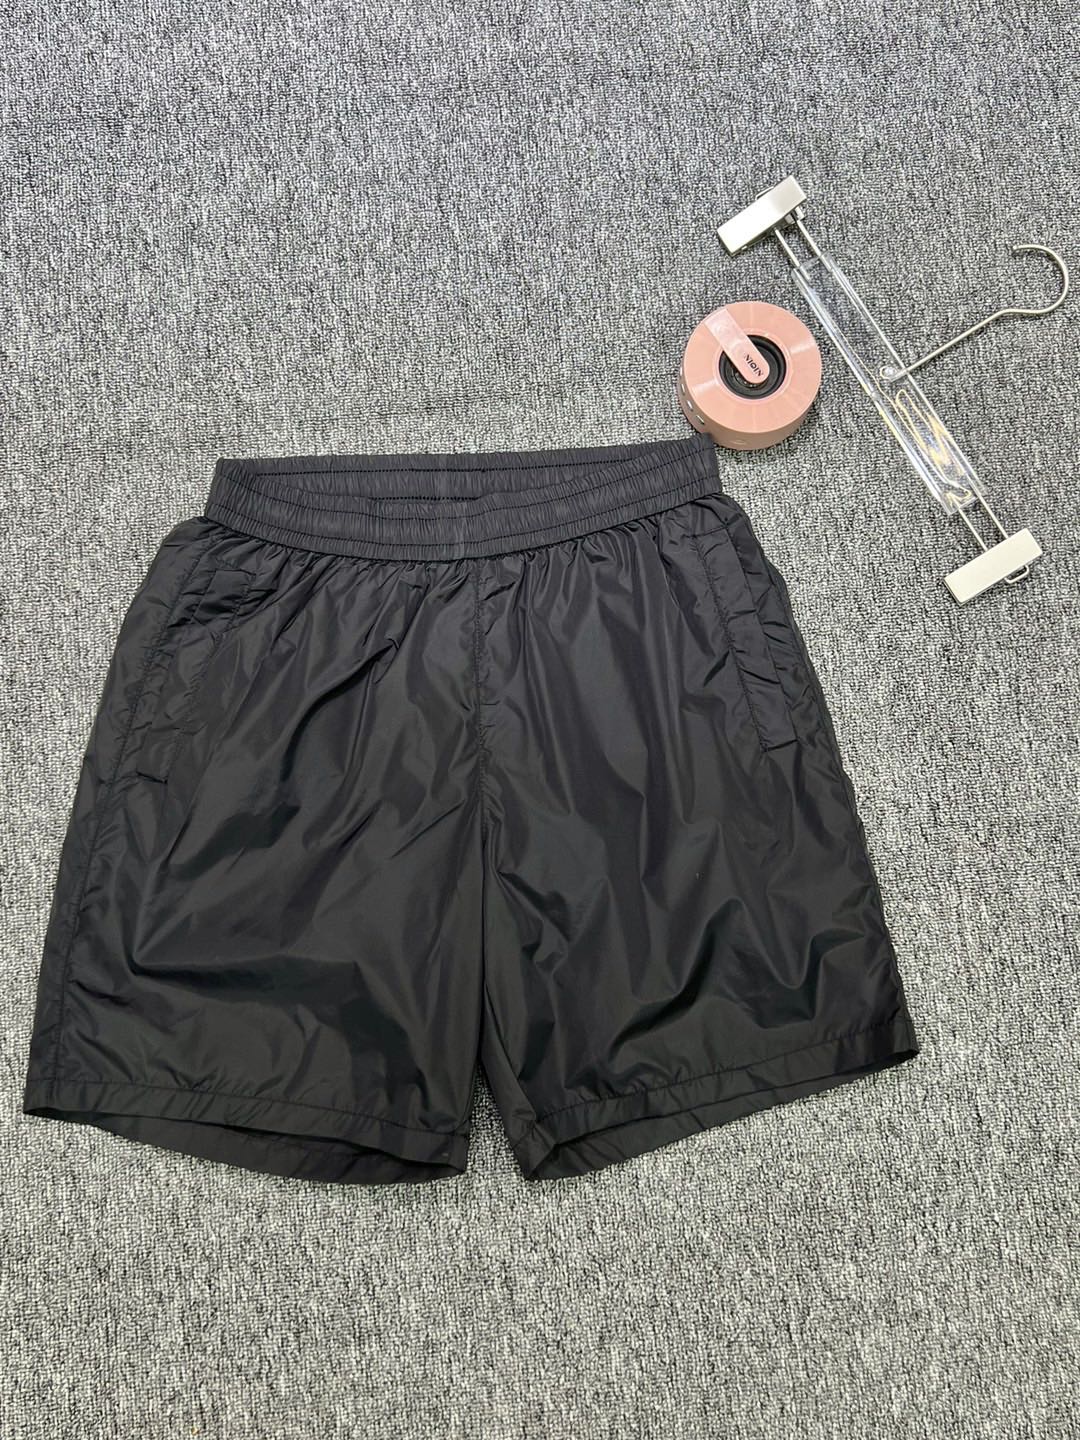 AAA+ Replica
 Prada Clothing Shorts Black Men Gauze Beach